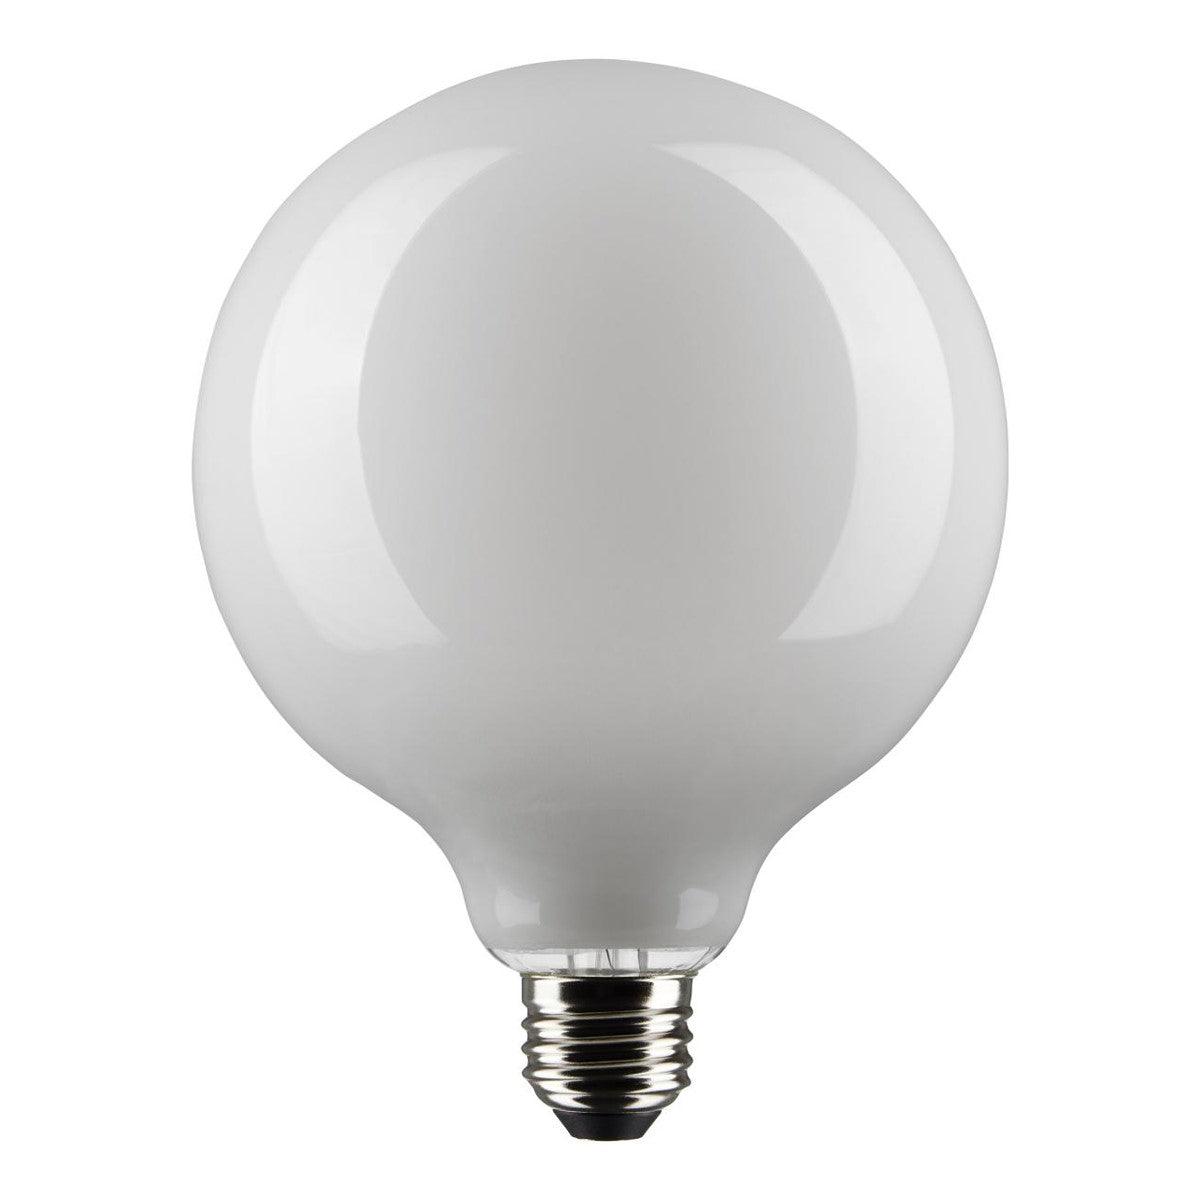 G40 LED Globe Bulb, 8 Watt, 800 Lumens, 3000K, E26 Medium Base, Frosted Finish